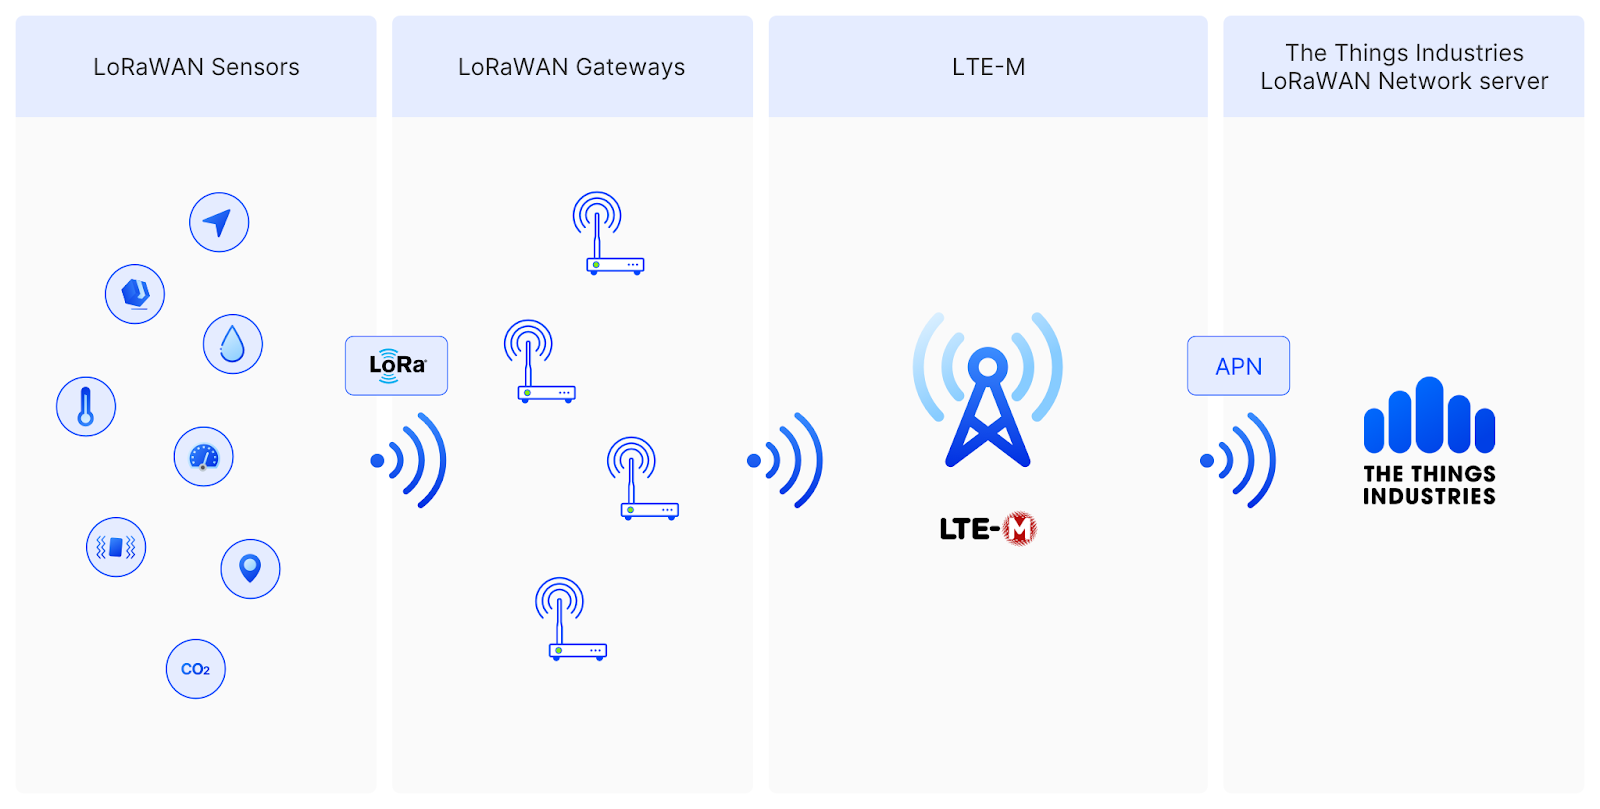 Combining LoRaWAN and LTE-M